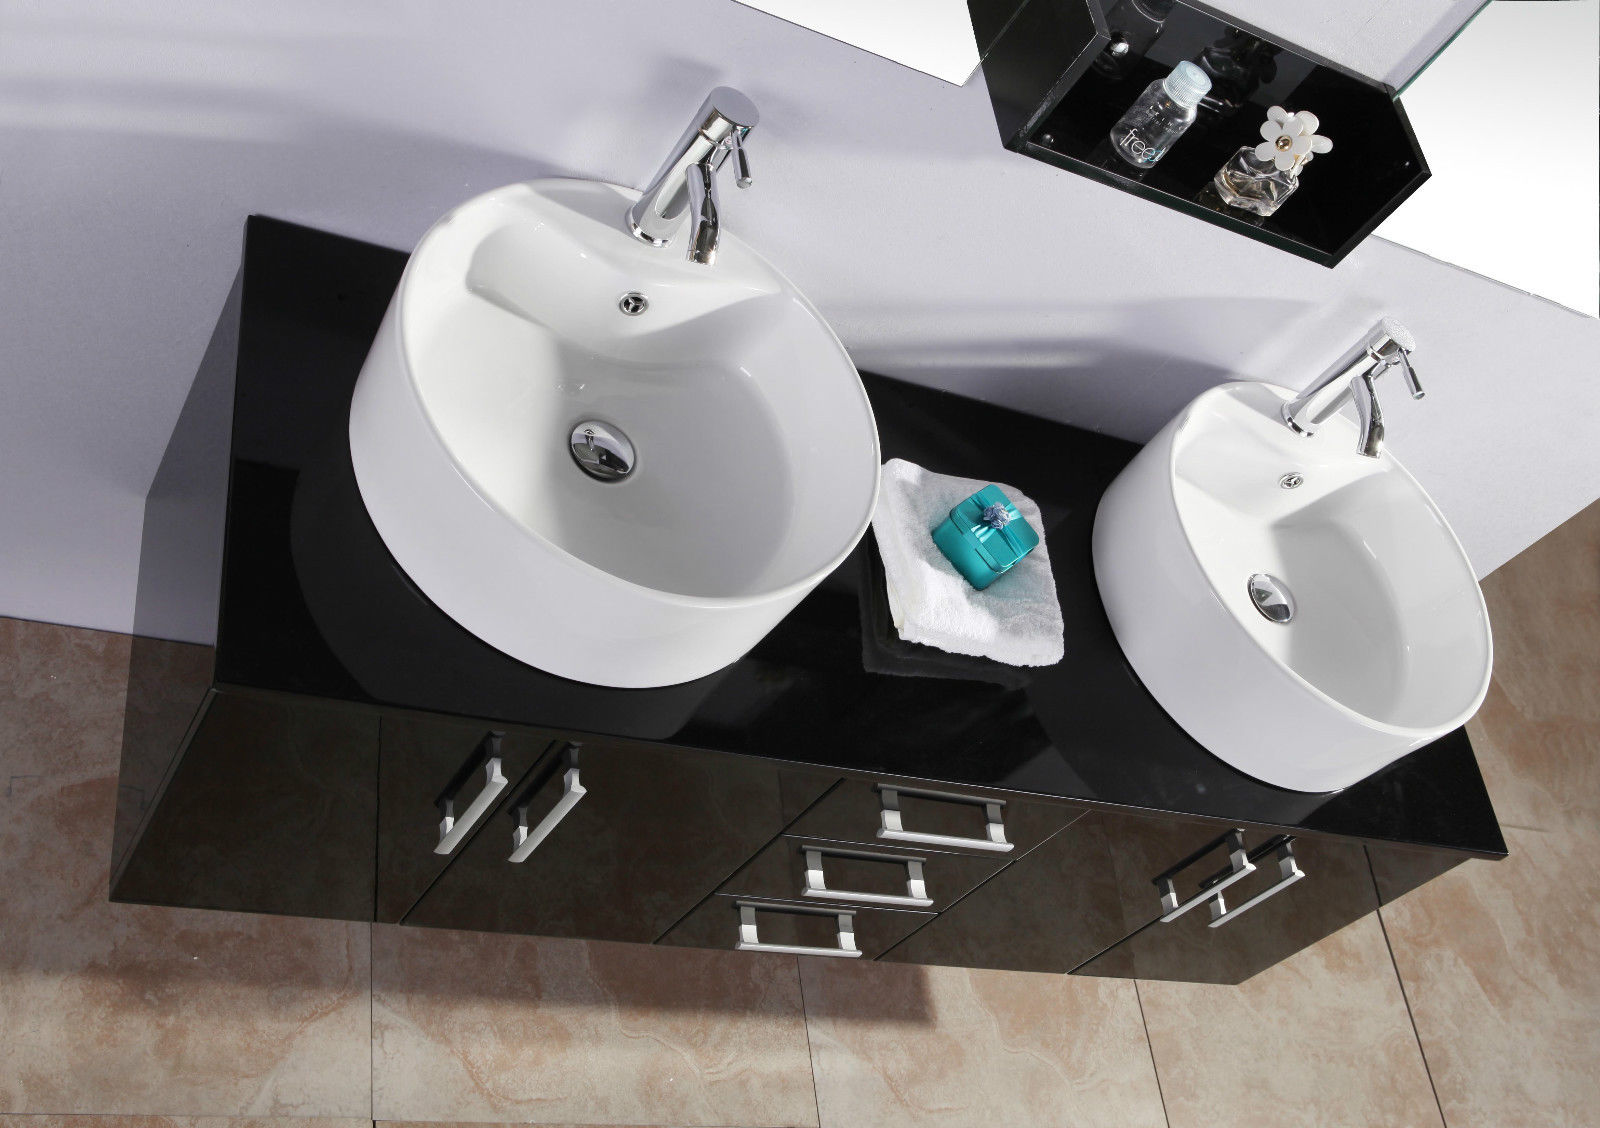 Bathroom-150-cm-double-washbasin-Diana-model-484_1542626860_603